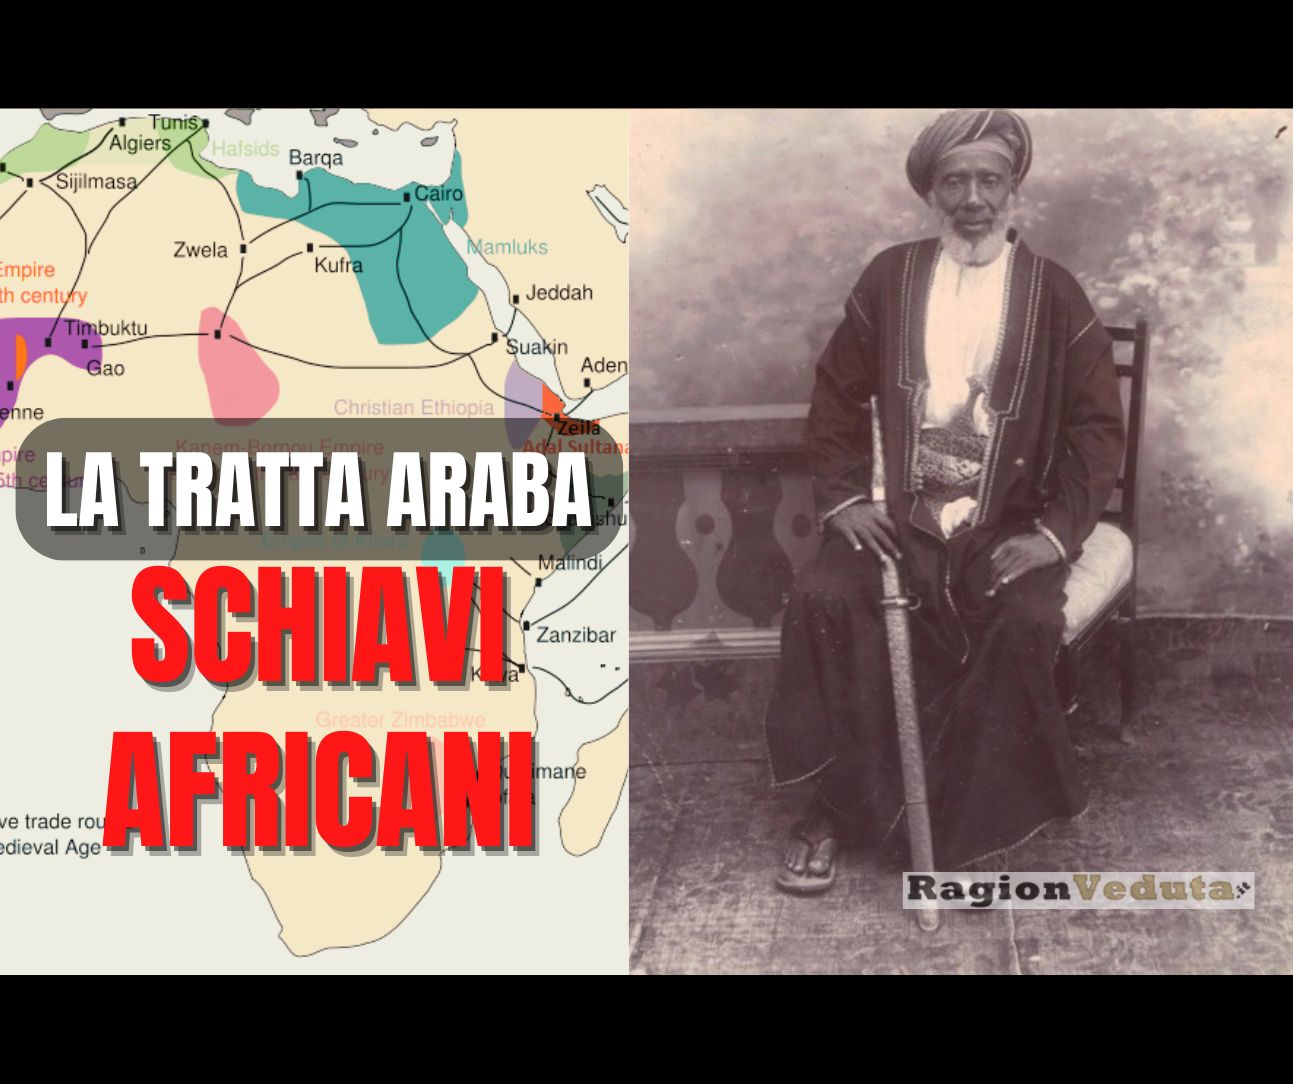 Tratta araba schiavi africani - ragionveduta.it